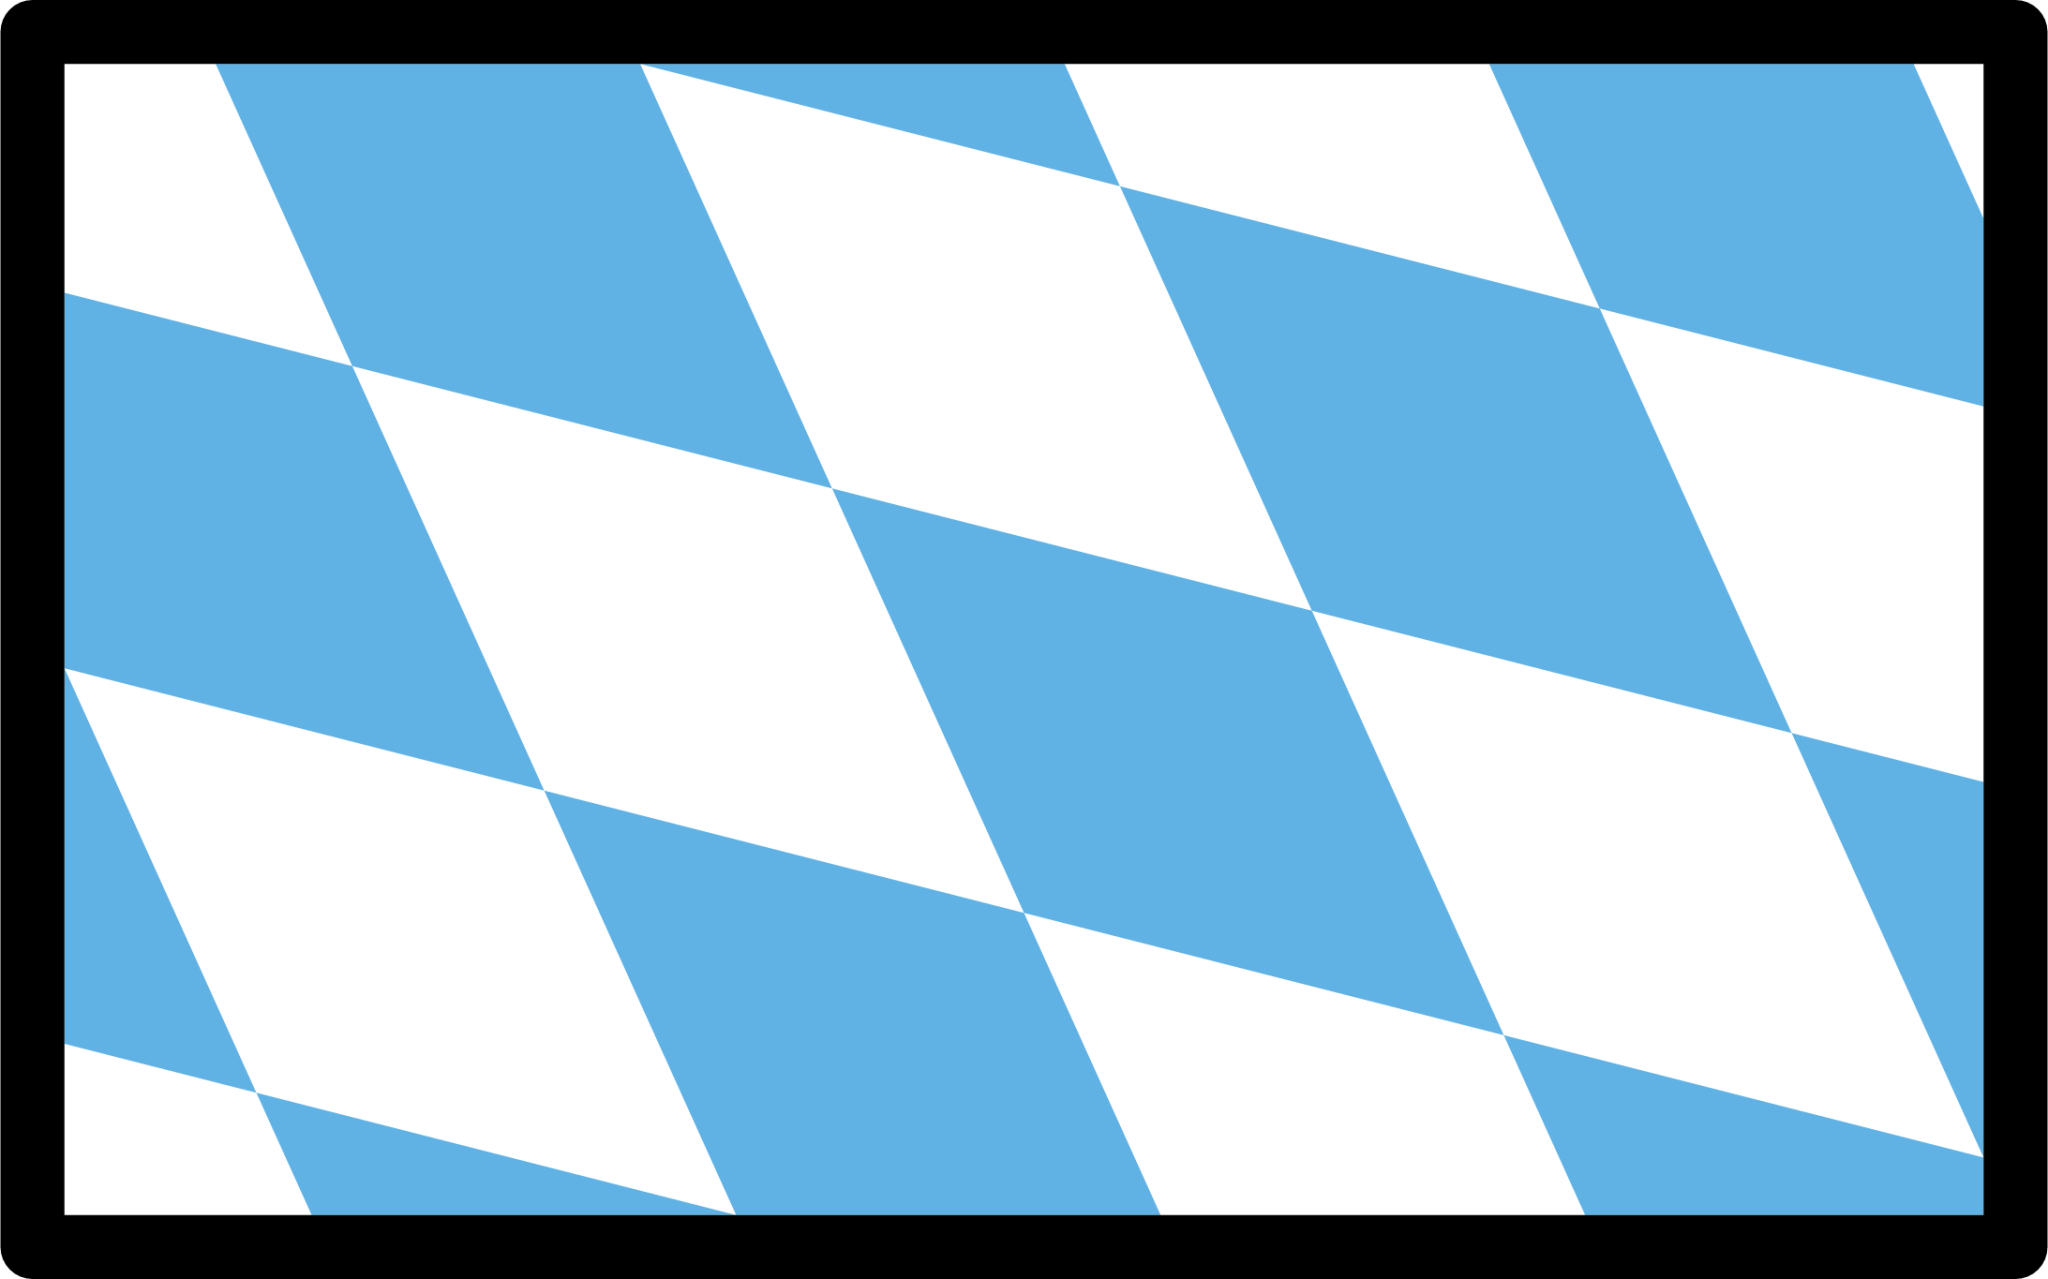 https://static-00.iconduck.com/assets.00/bavaria-flag-emoji-2048x1279-8hwgiex9.png